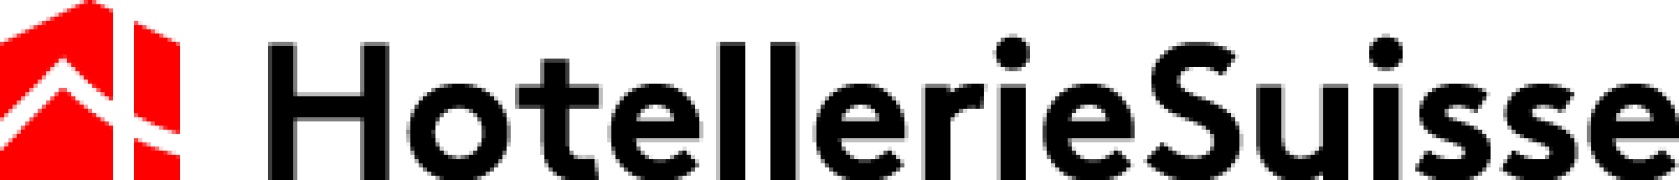 hs-logo-dachverband-rs-rgb_1.png